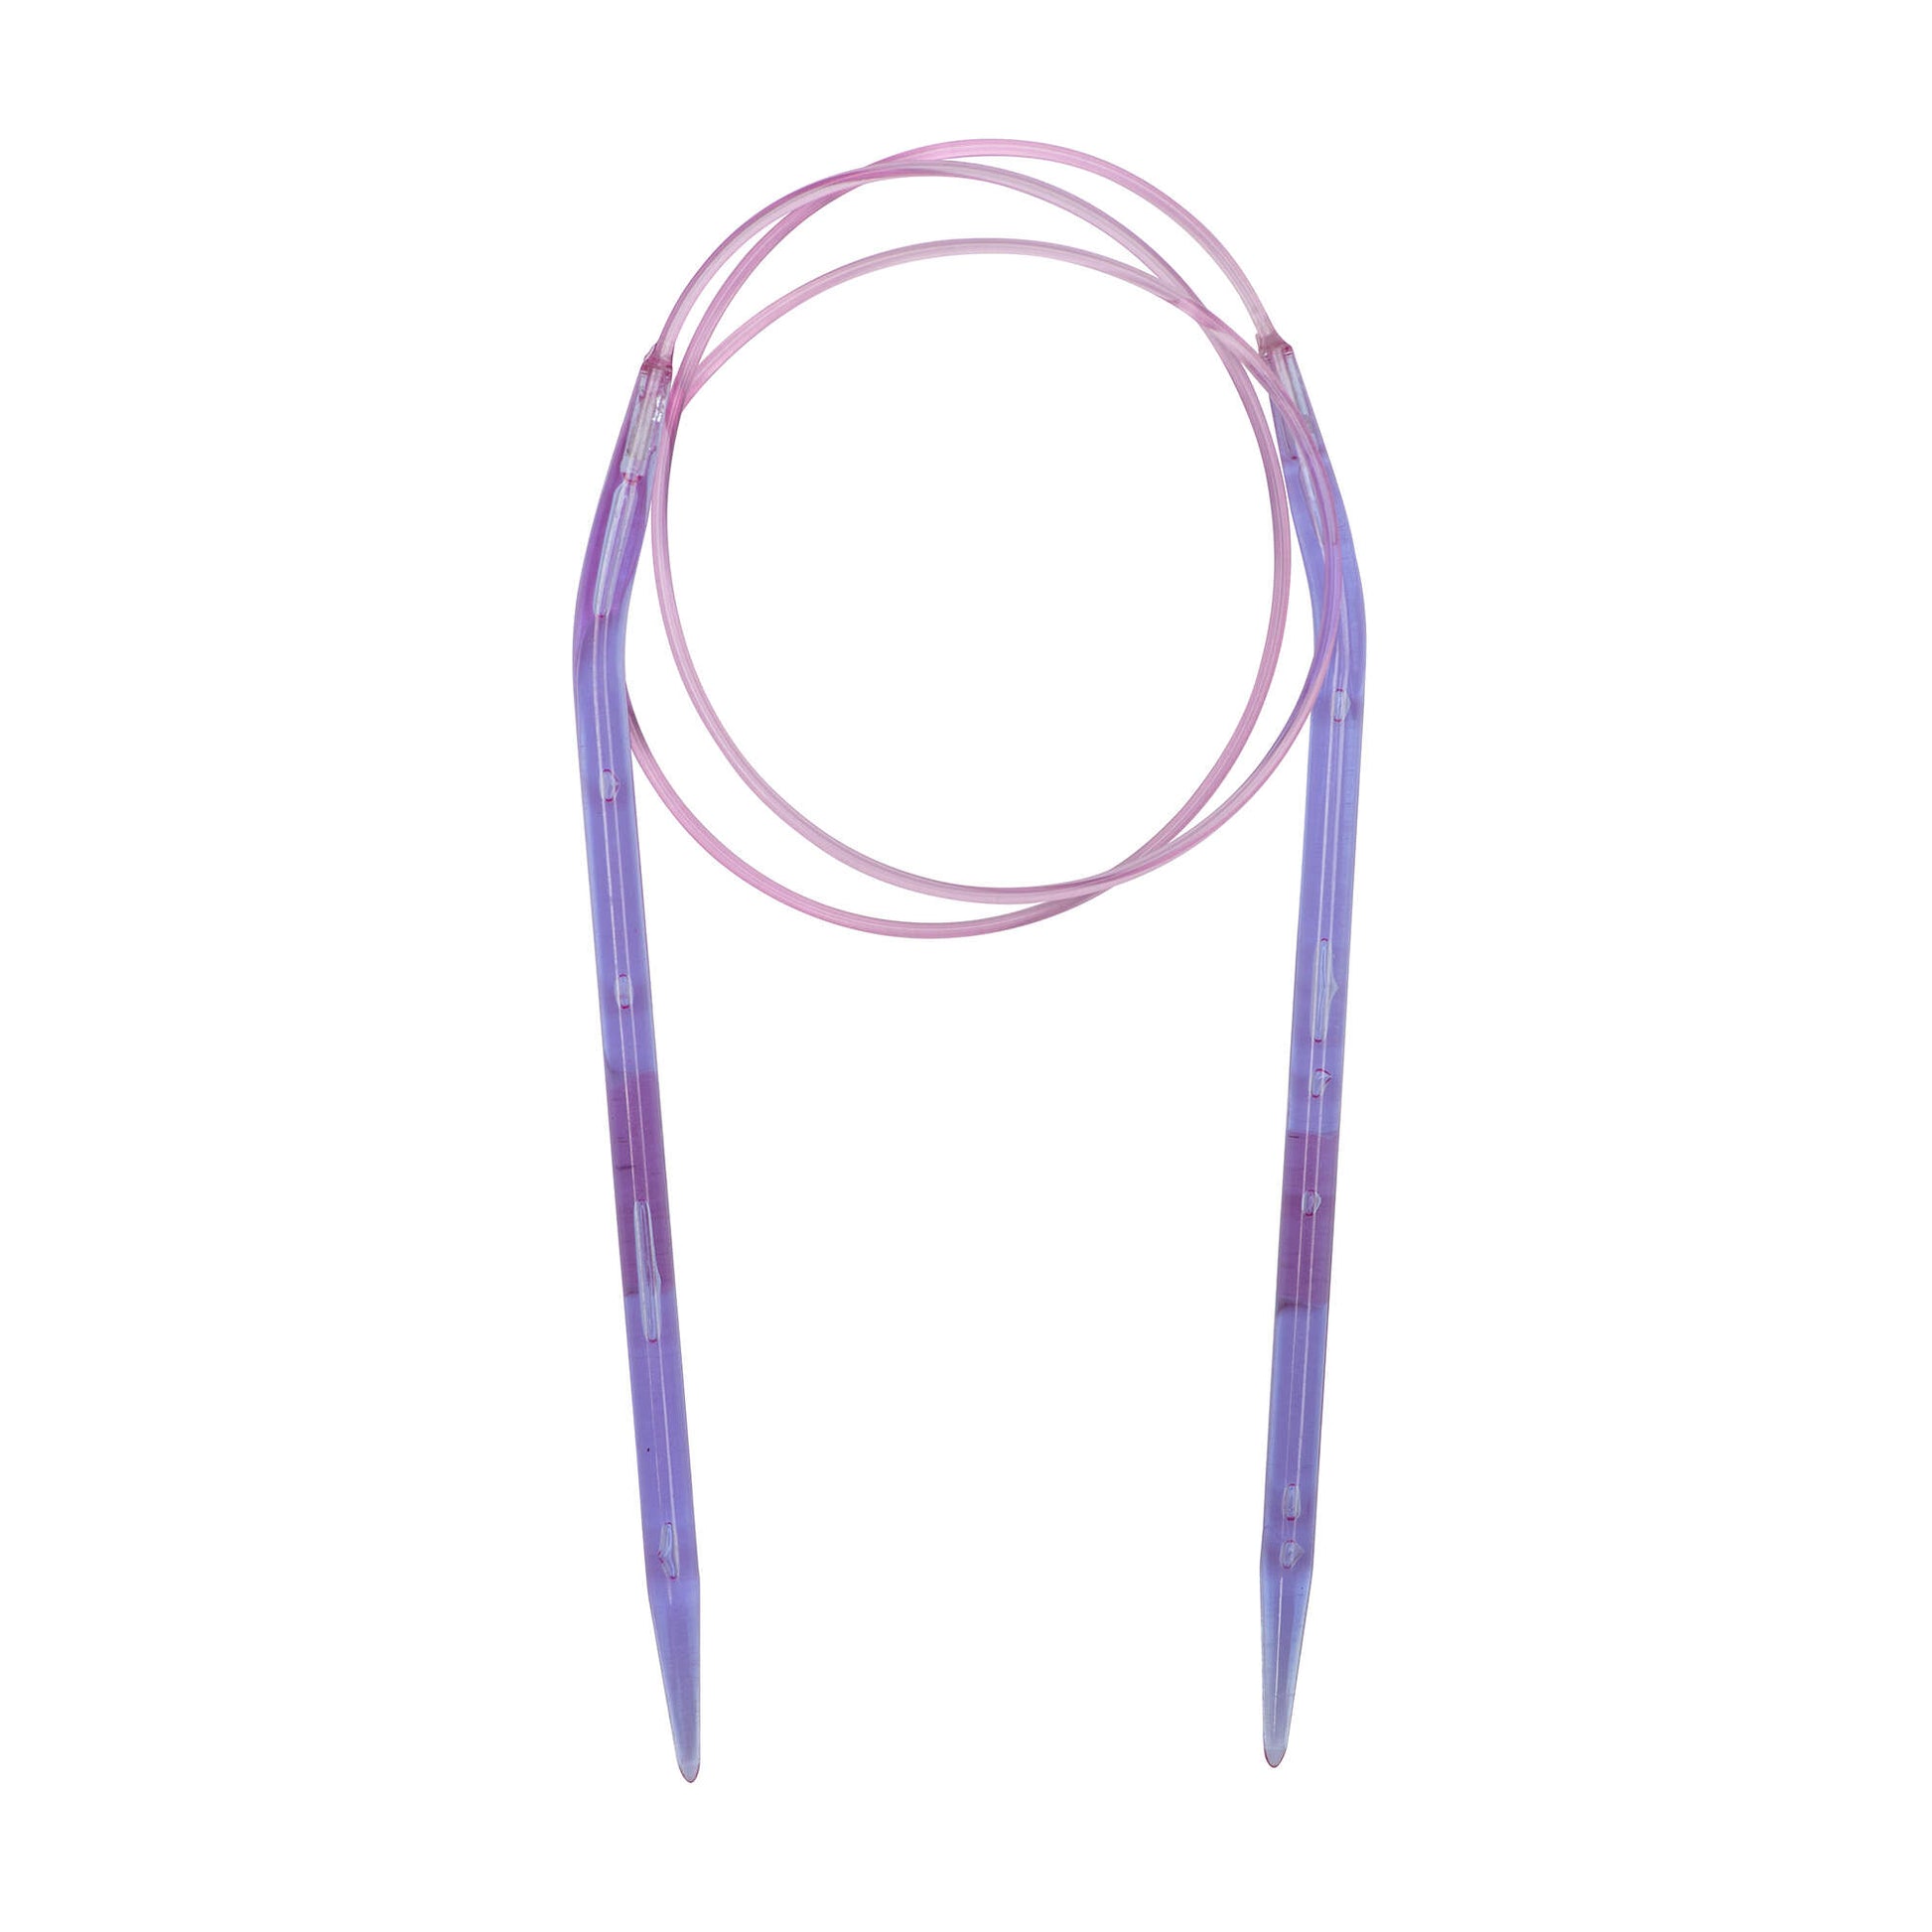 Lion Brand Yarn Circular Knitting Needles Size 11 (8mm) - 29” Long - New